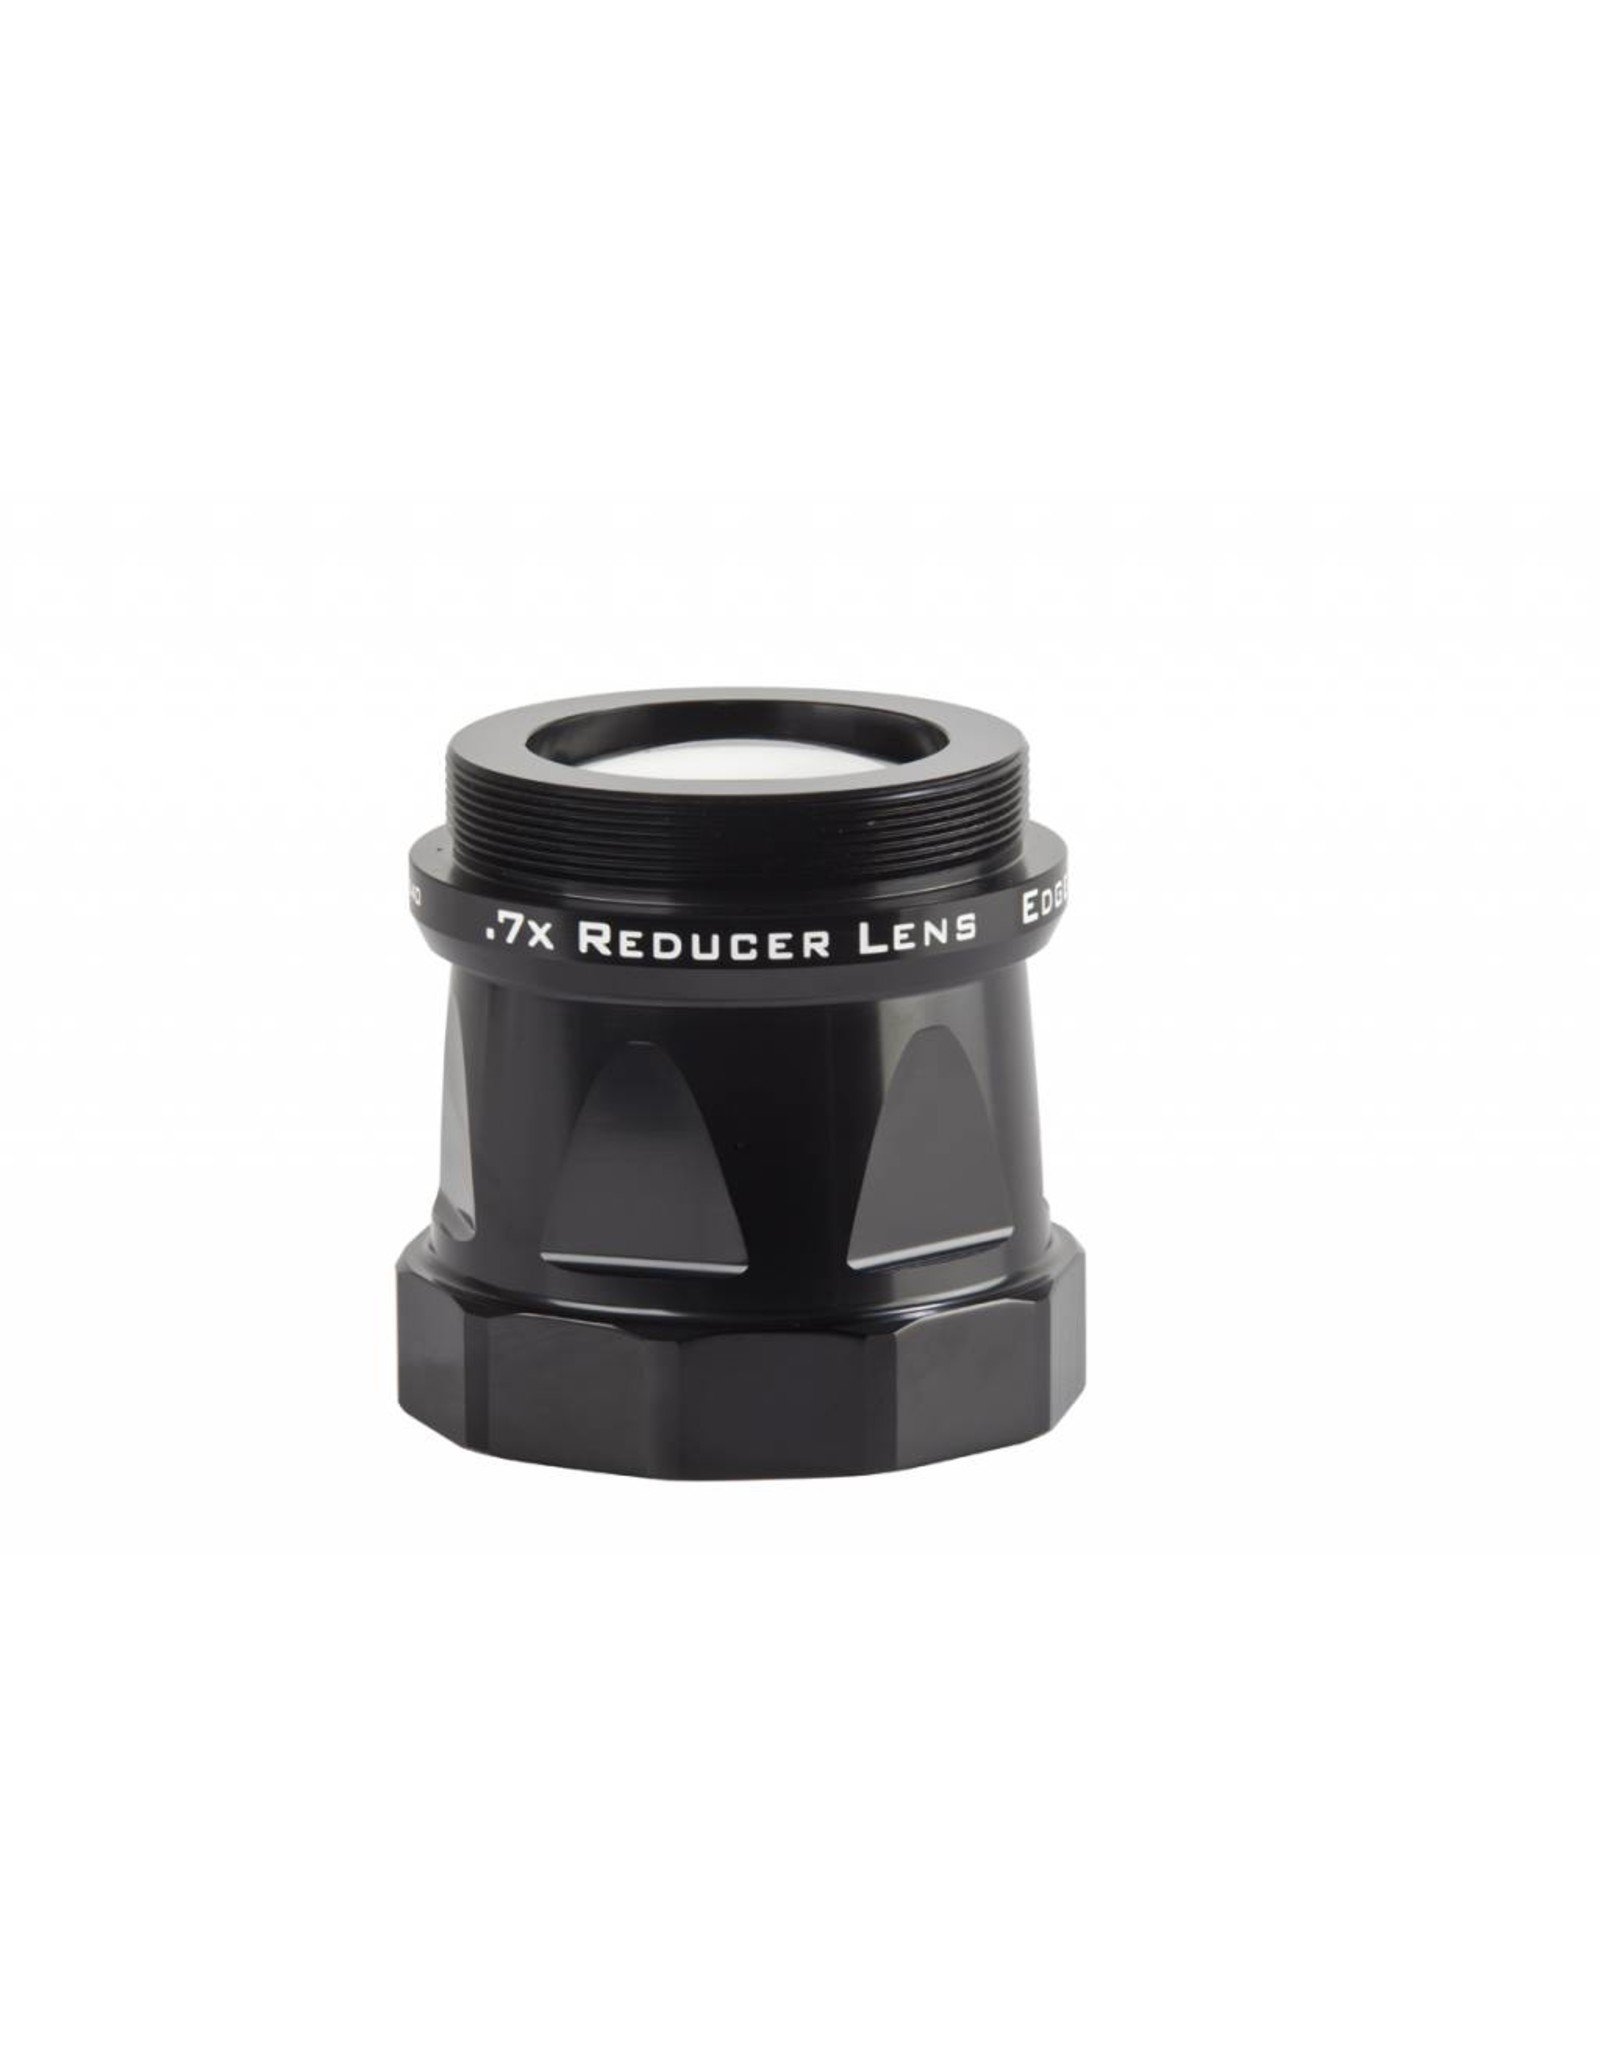 Celestron Celestron Reducer Lens .7x - EdgeHD 1400